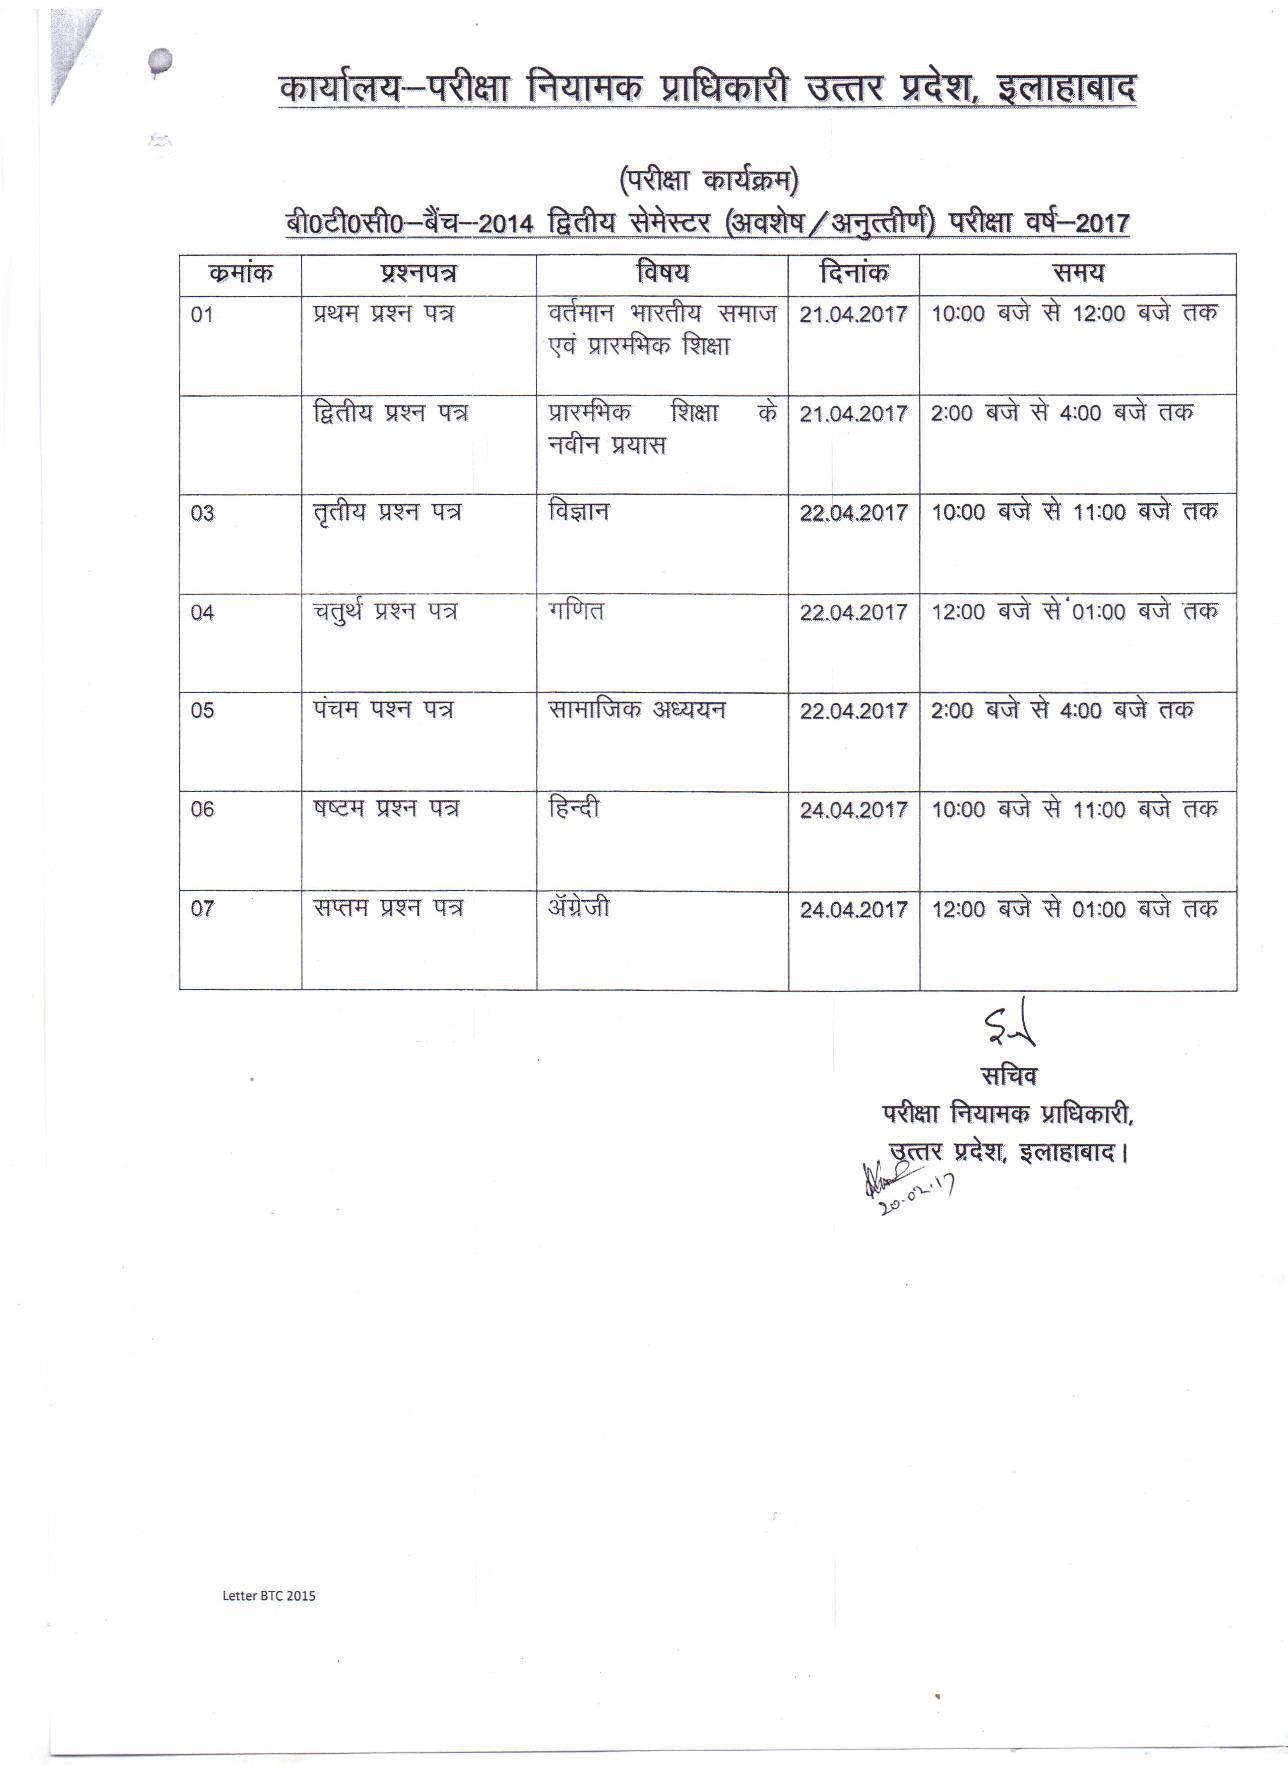 timetable-2014-2015-btc-batch-2017-page-002